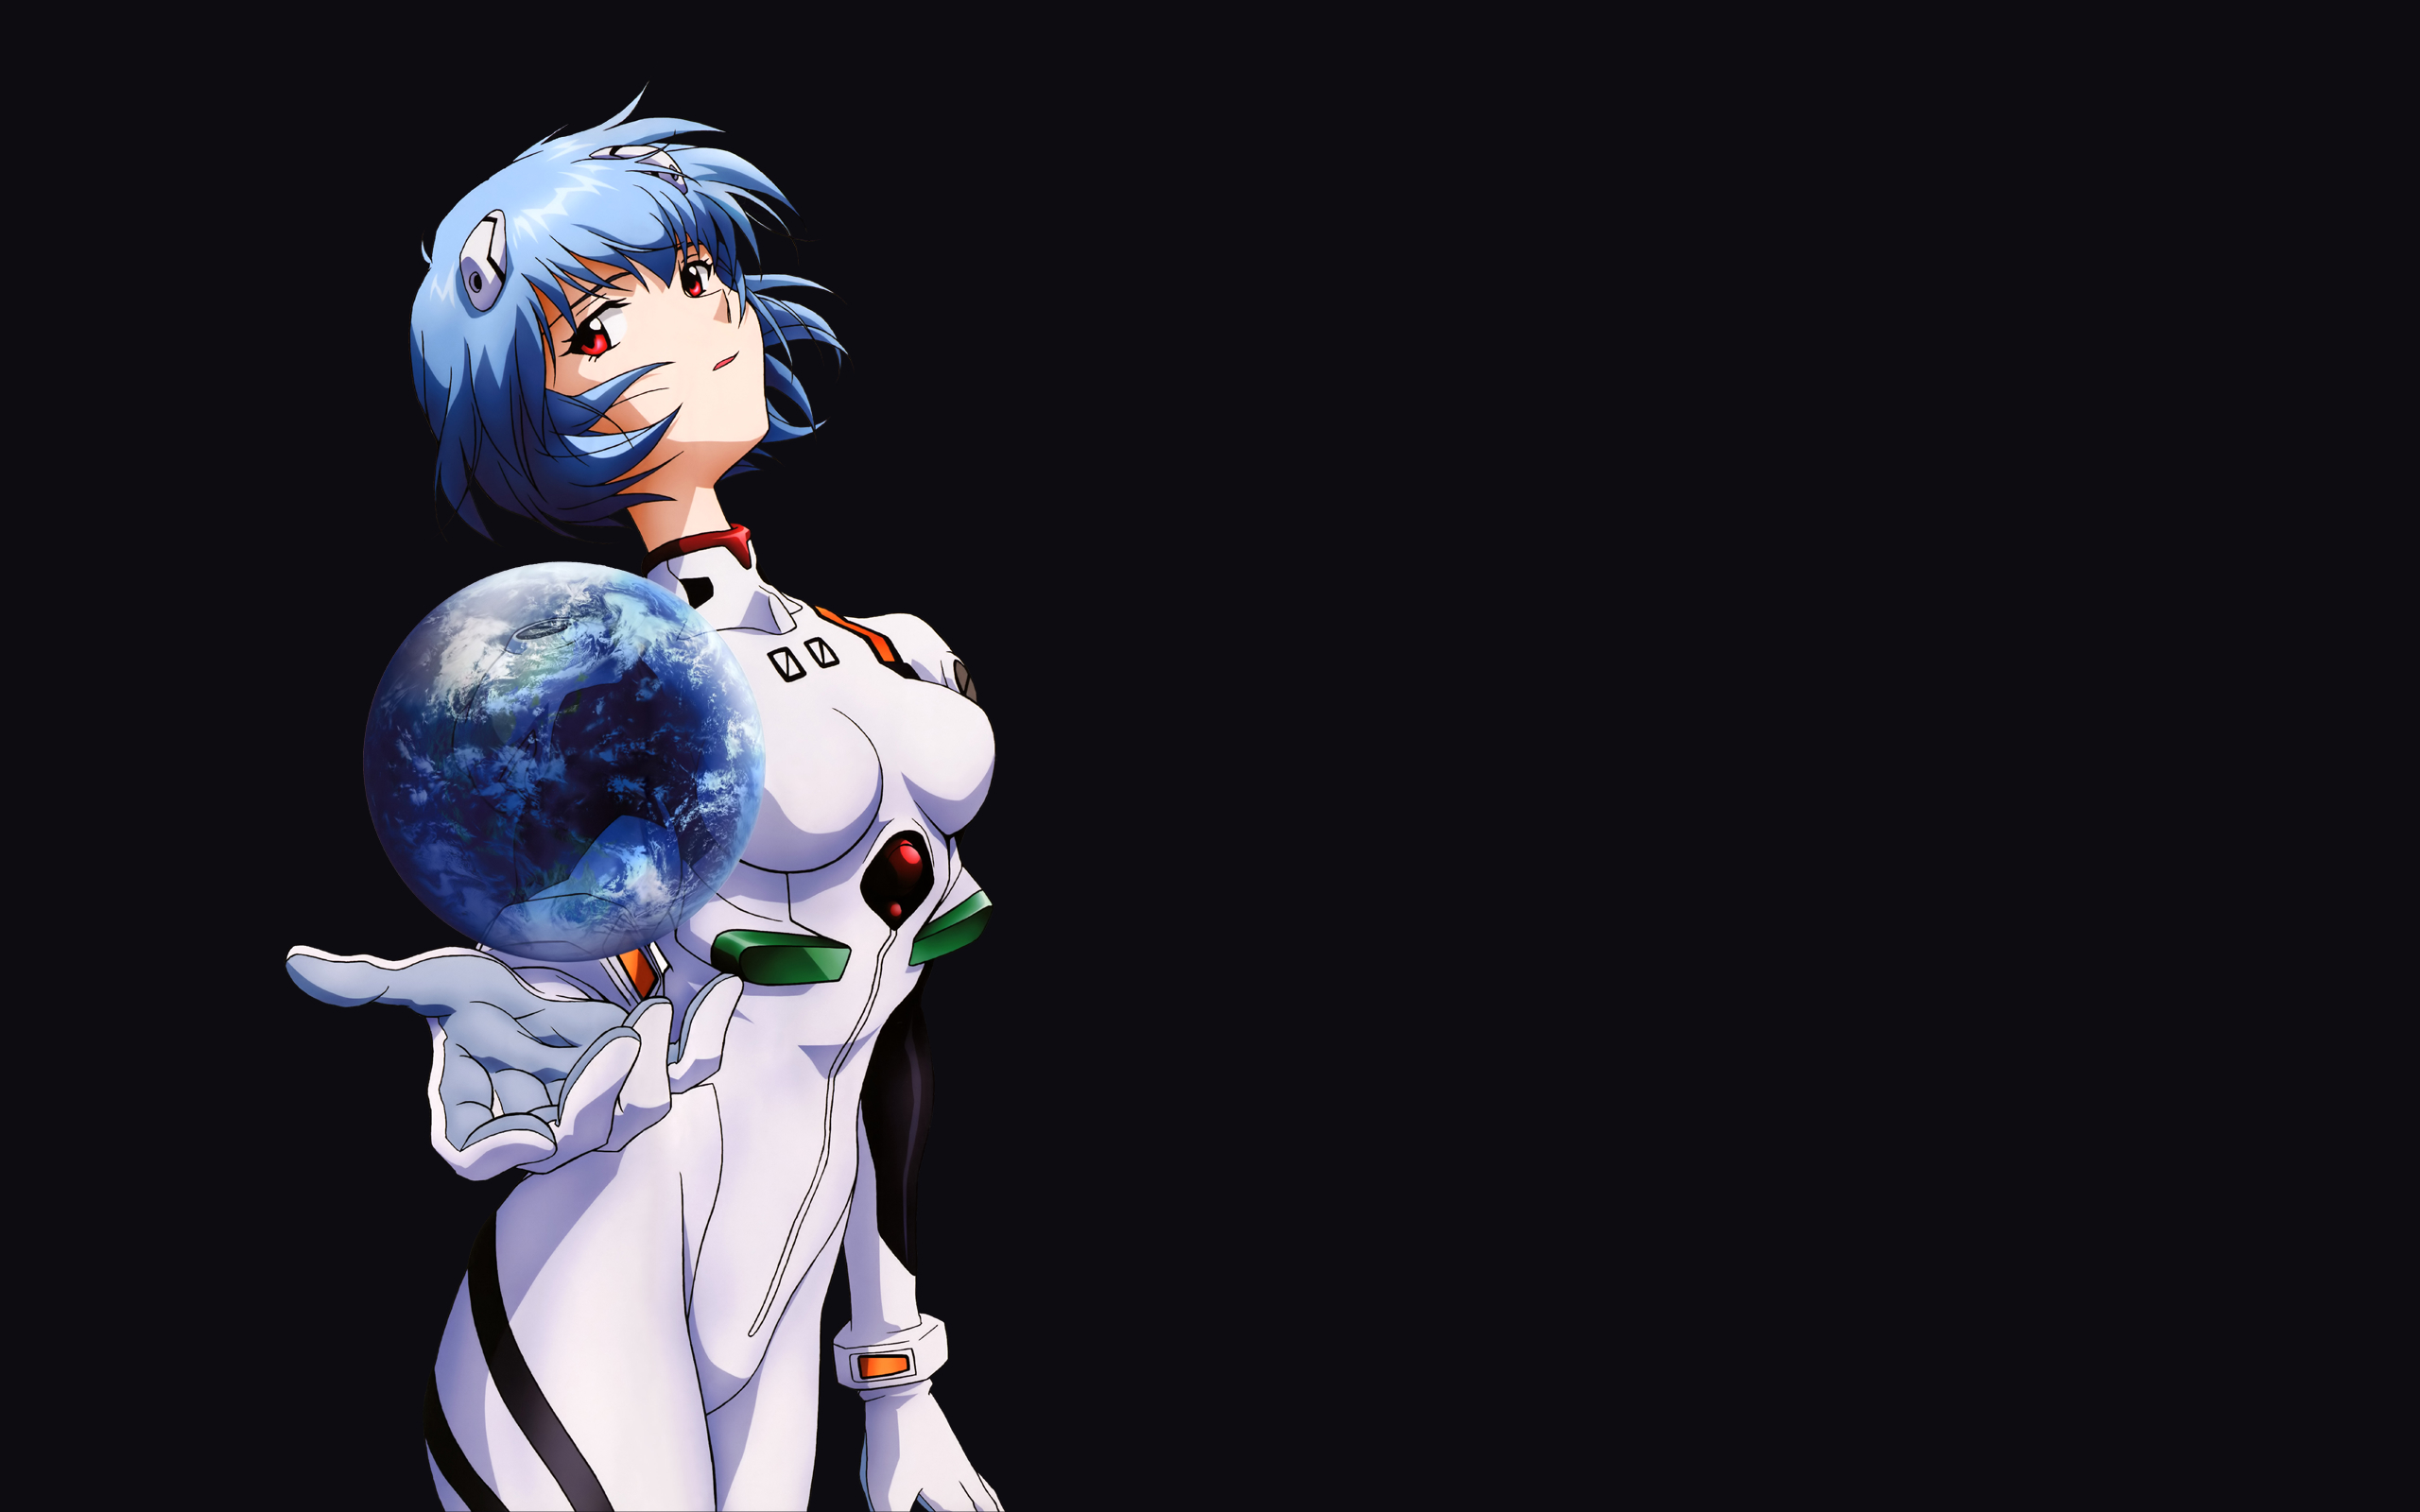 Rei Ayanami from Neon Genesis Evangelion in anime-style desktop wallpaper.